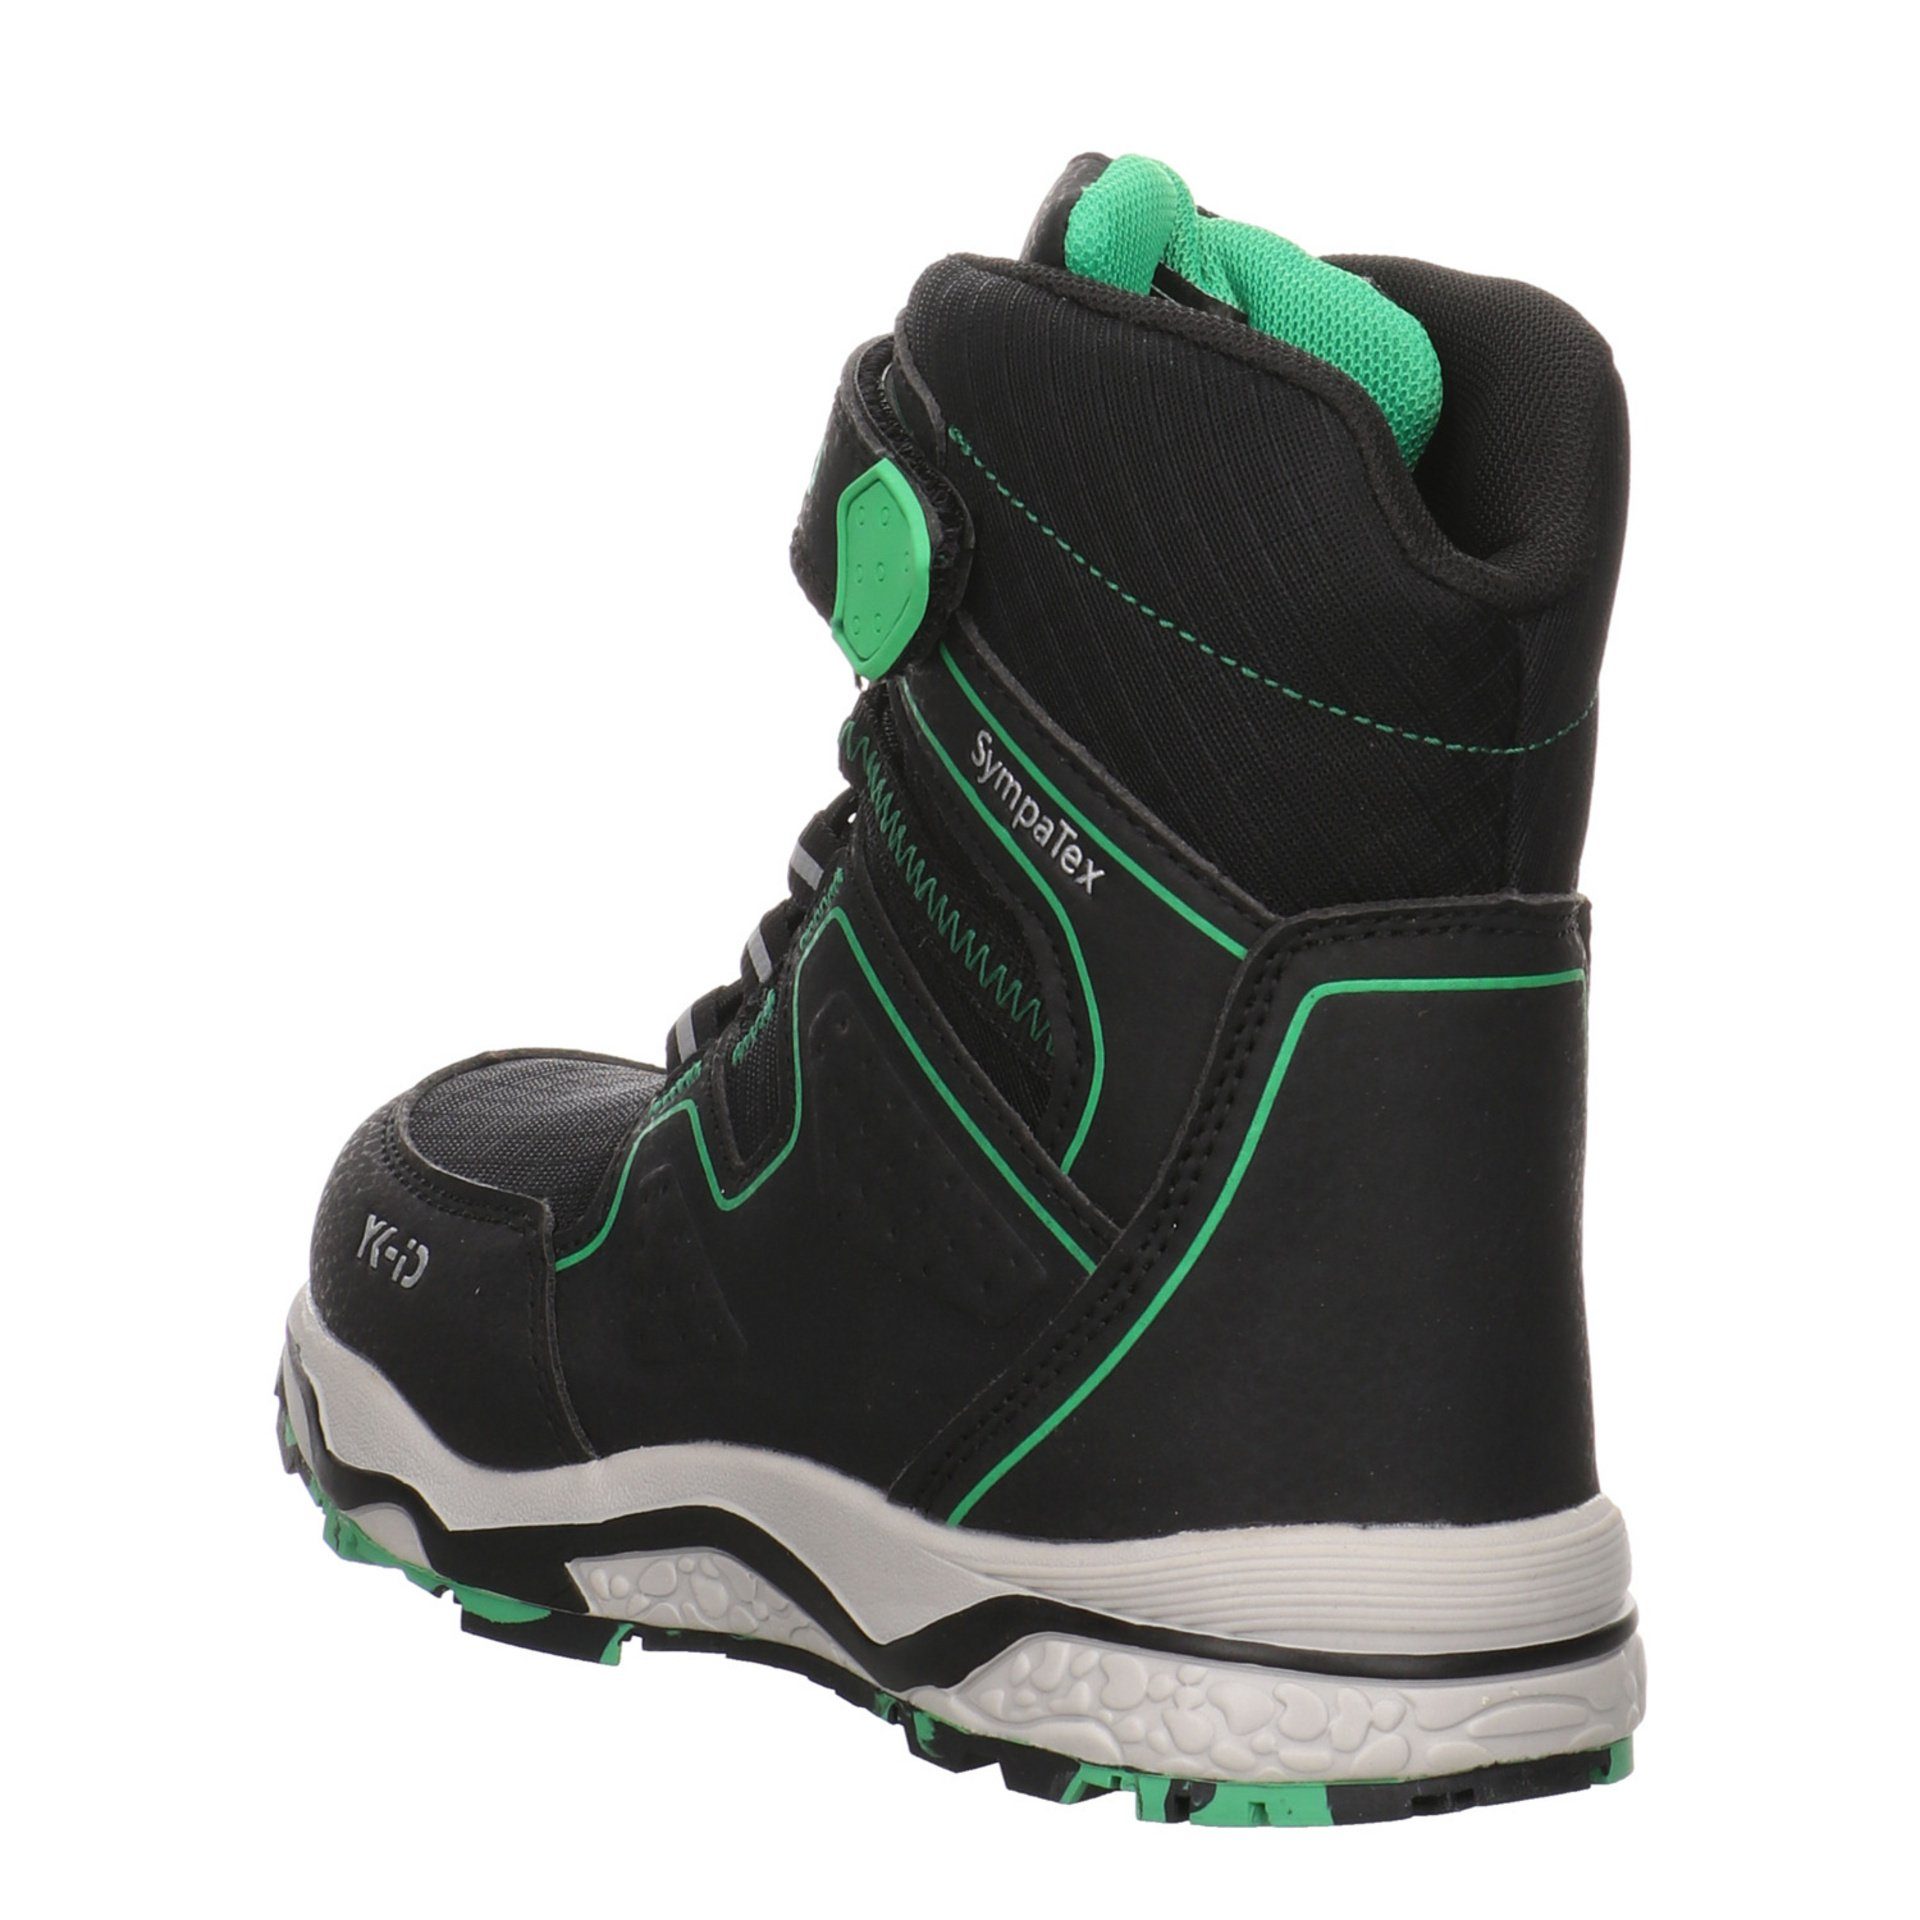 YK-ID Stiefel green Lurchi Lucian-Tex Salamander Stiefel Schuhe black by Boots Jungen Synthetikkombination